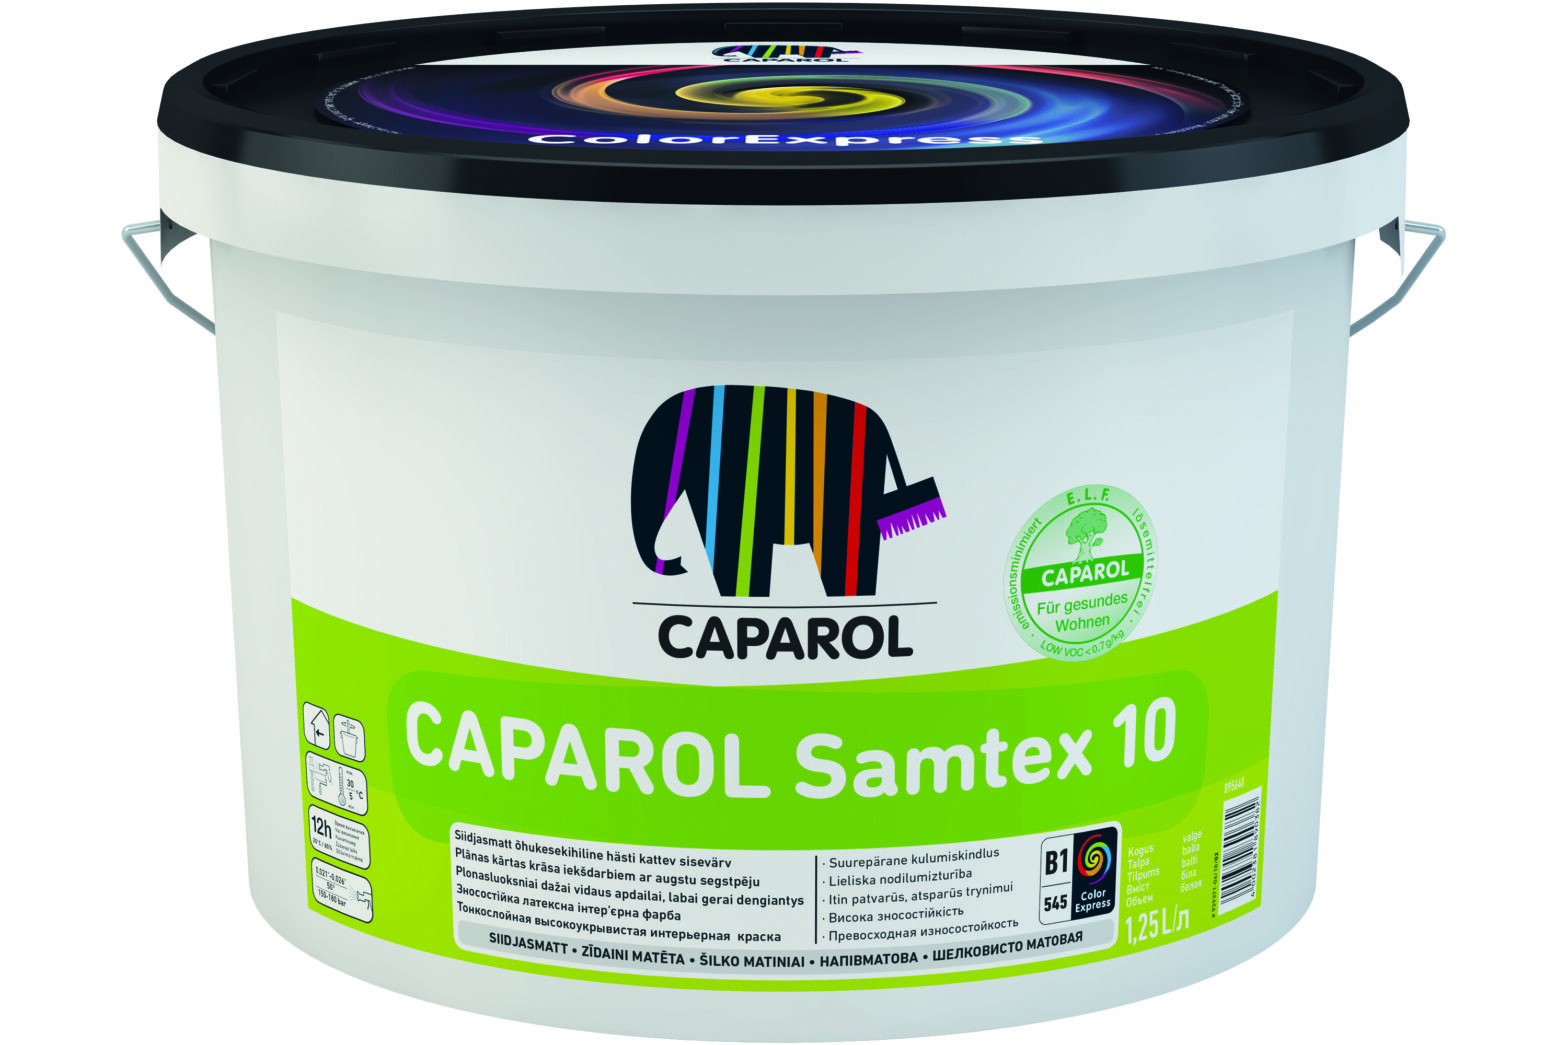 Sisevärv Caparol Samtex 10 B1 1,25L